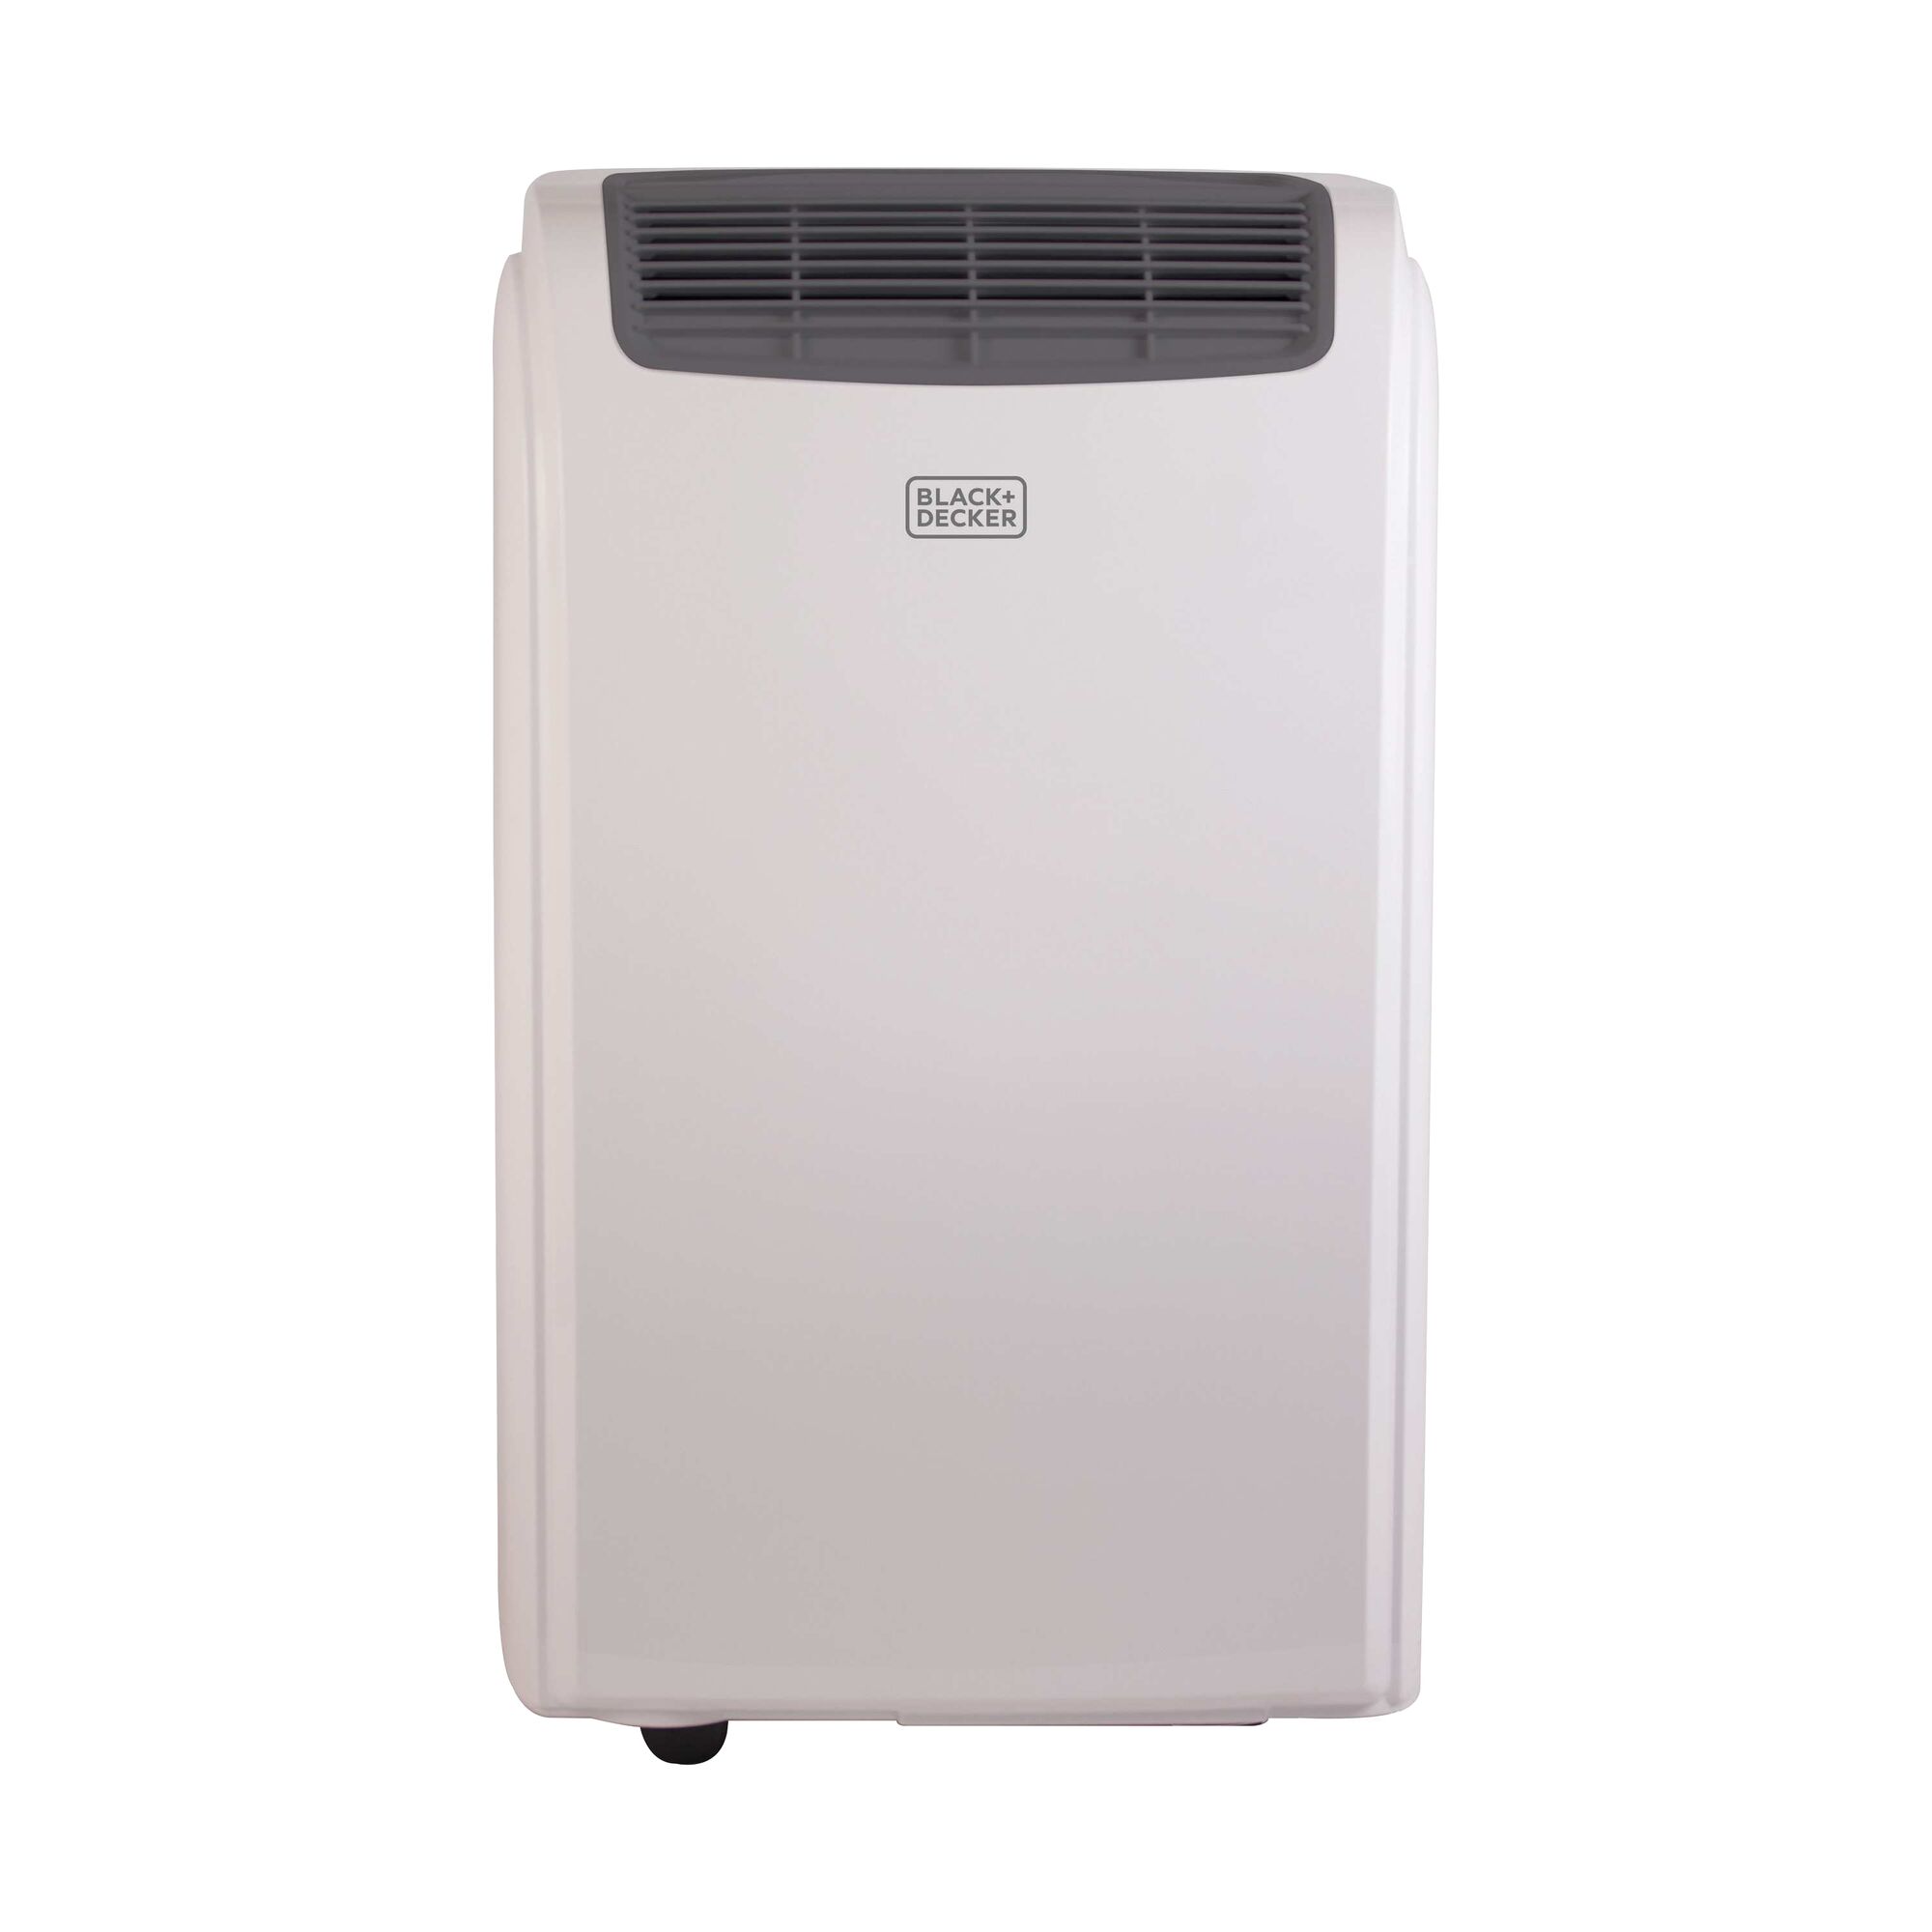 7700 B T U  Portable Air Conditioner.